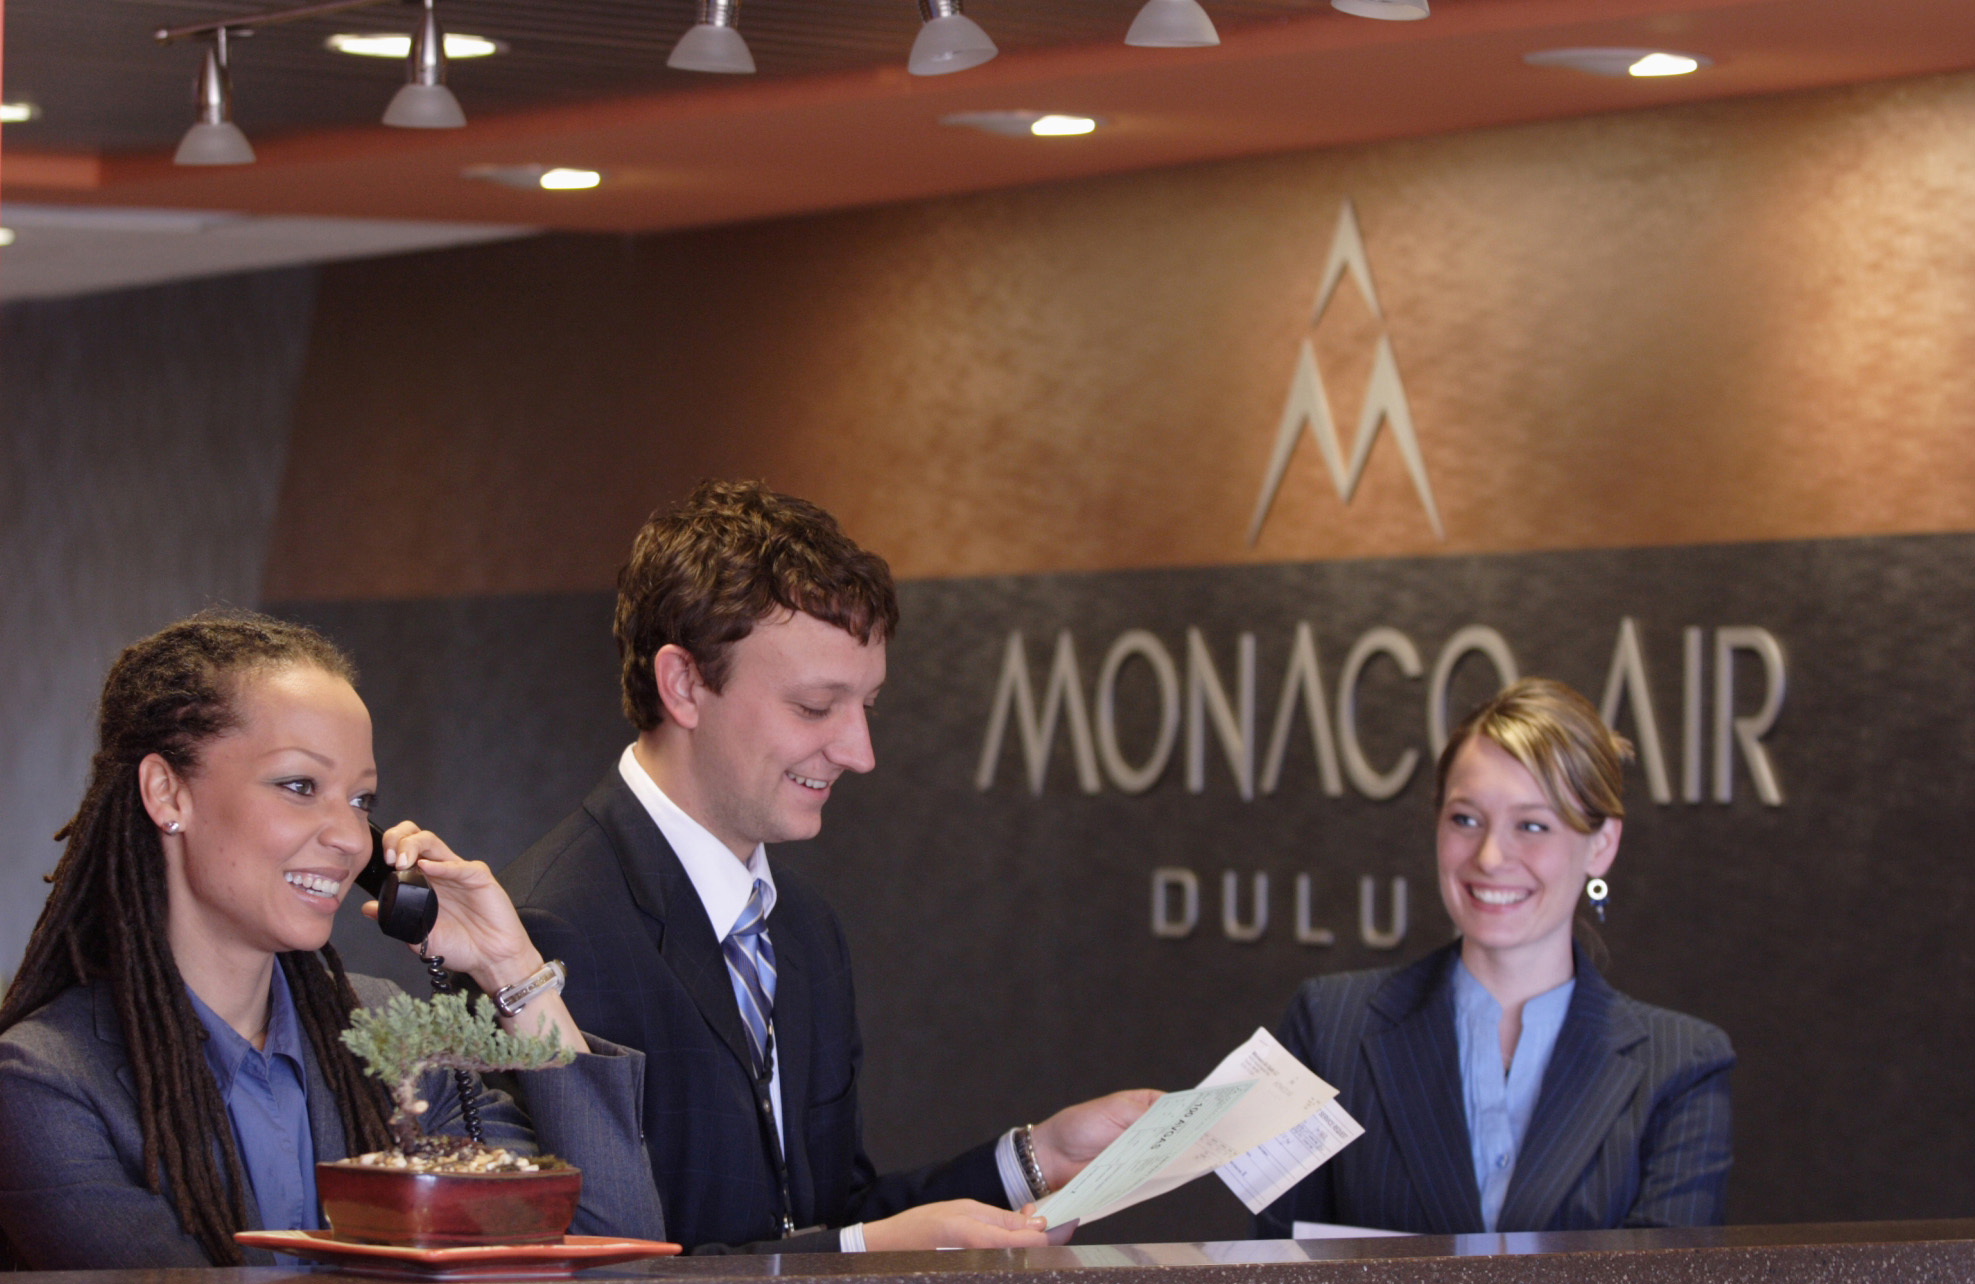 Concierge personnel at Monaco Air.